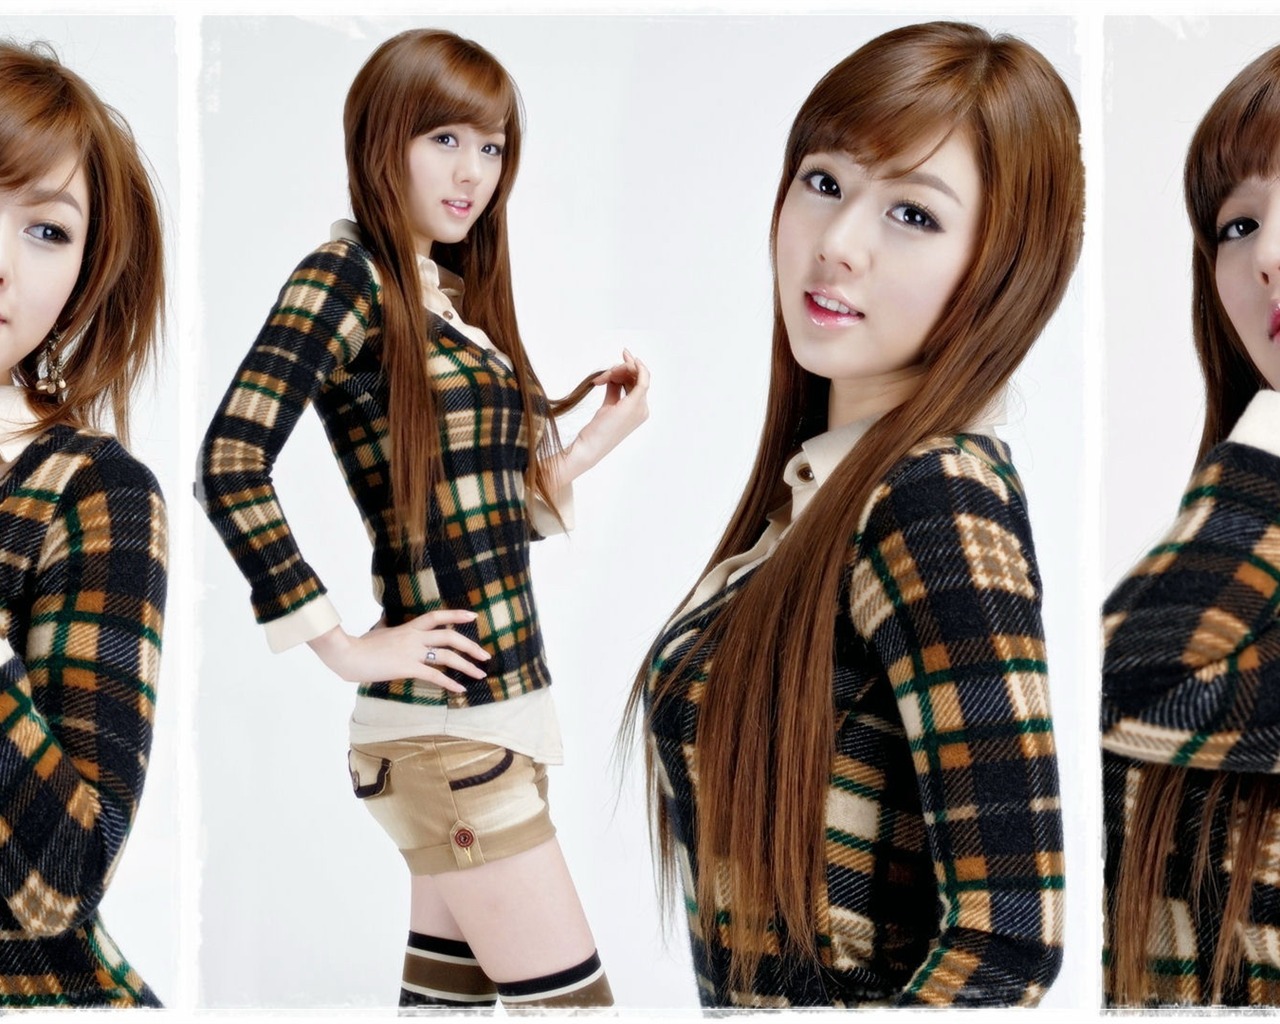 韓國車展模特 Hwang Mi Hee & Song Jina #14 - 1280x1024